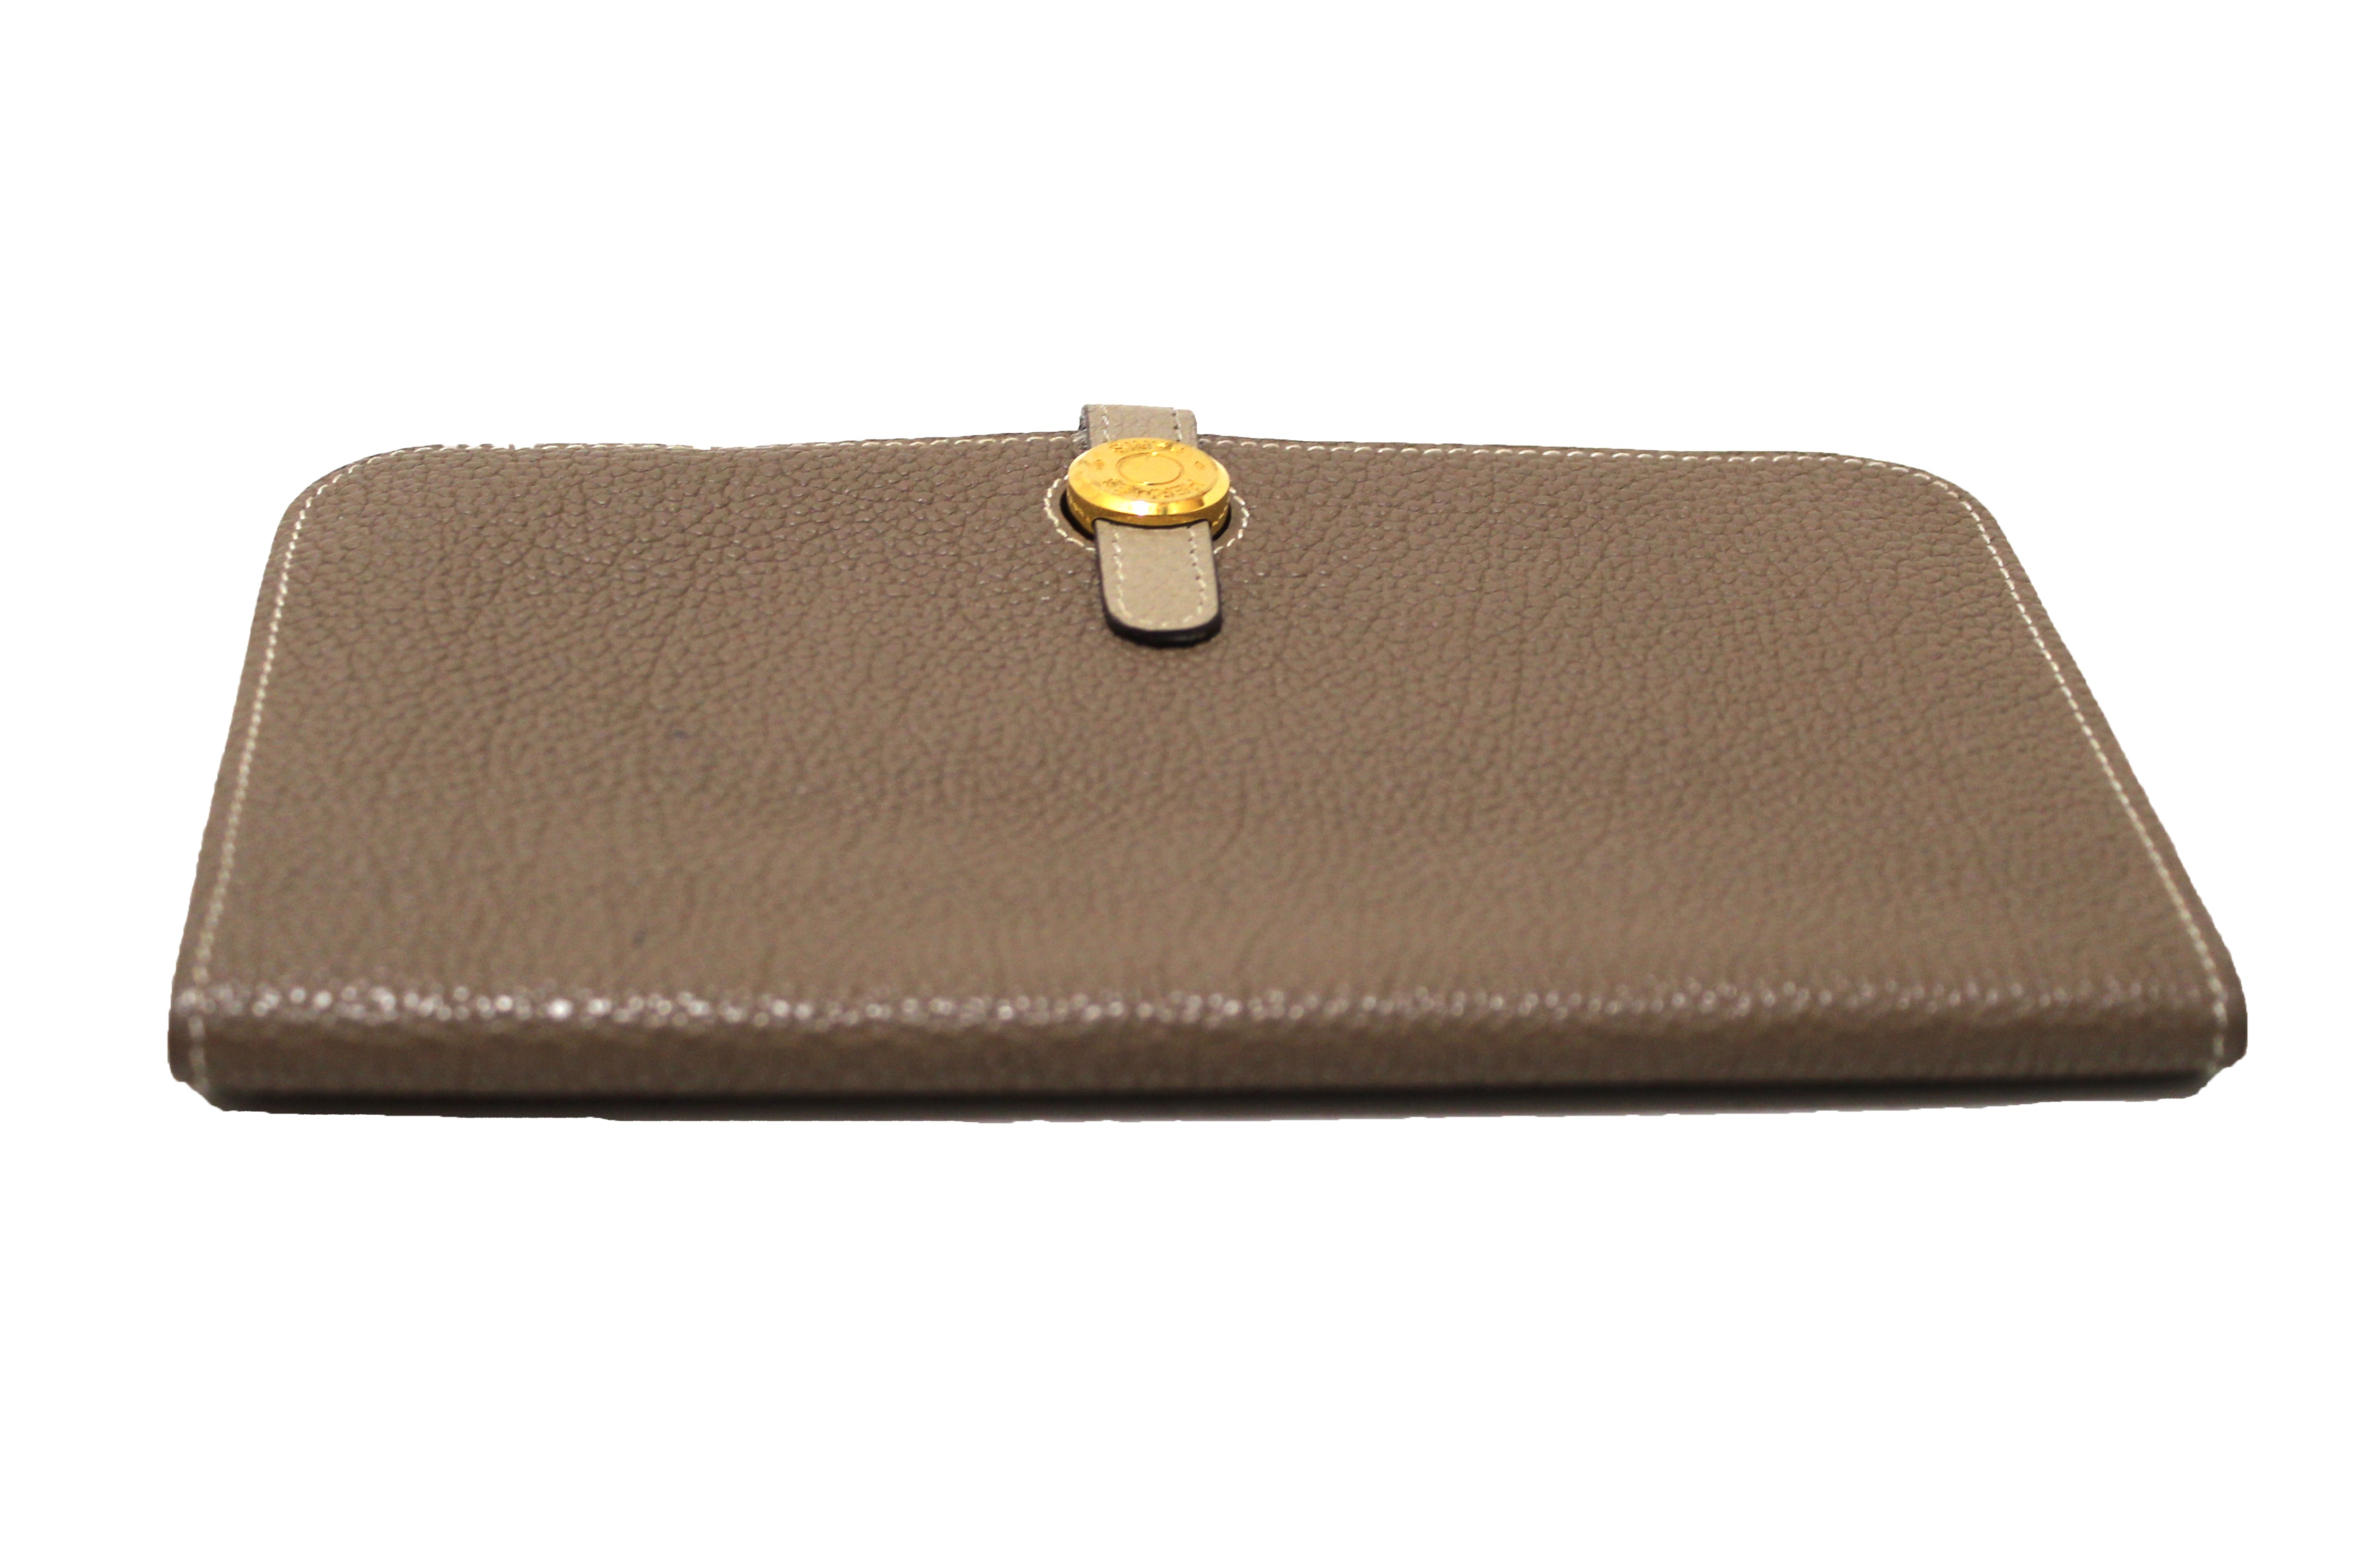 Hermes Dogon Wallet in Gold Togo, Small Leather Goods - Designer